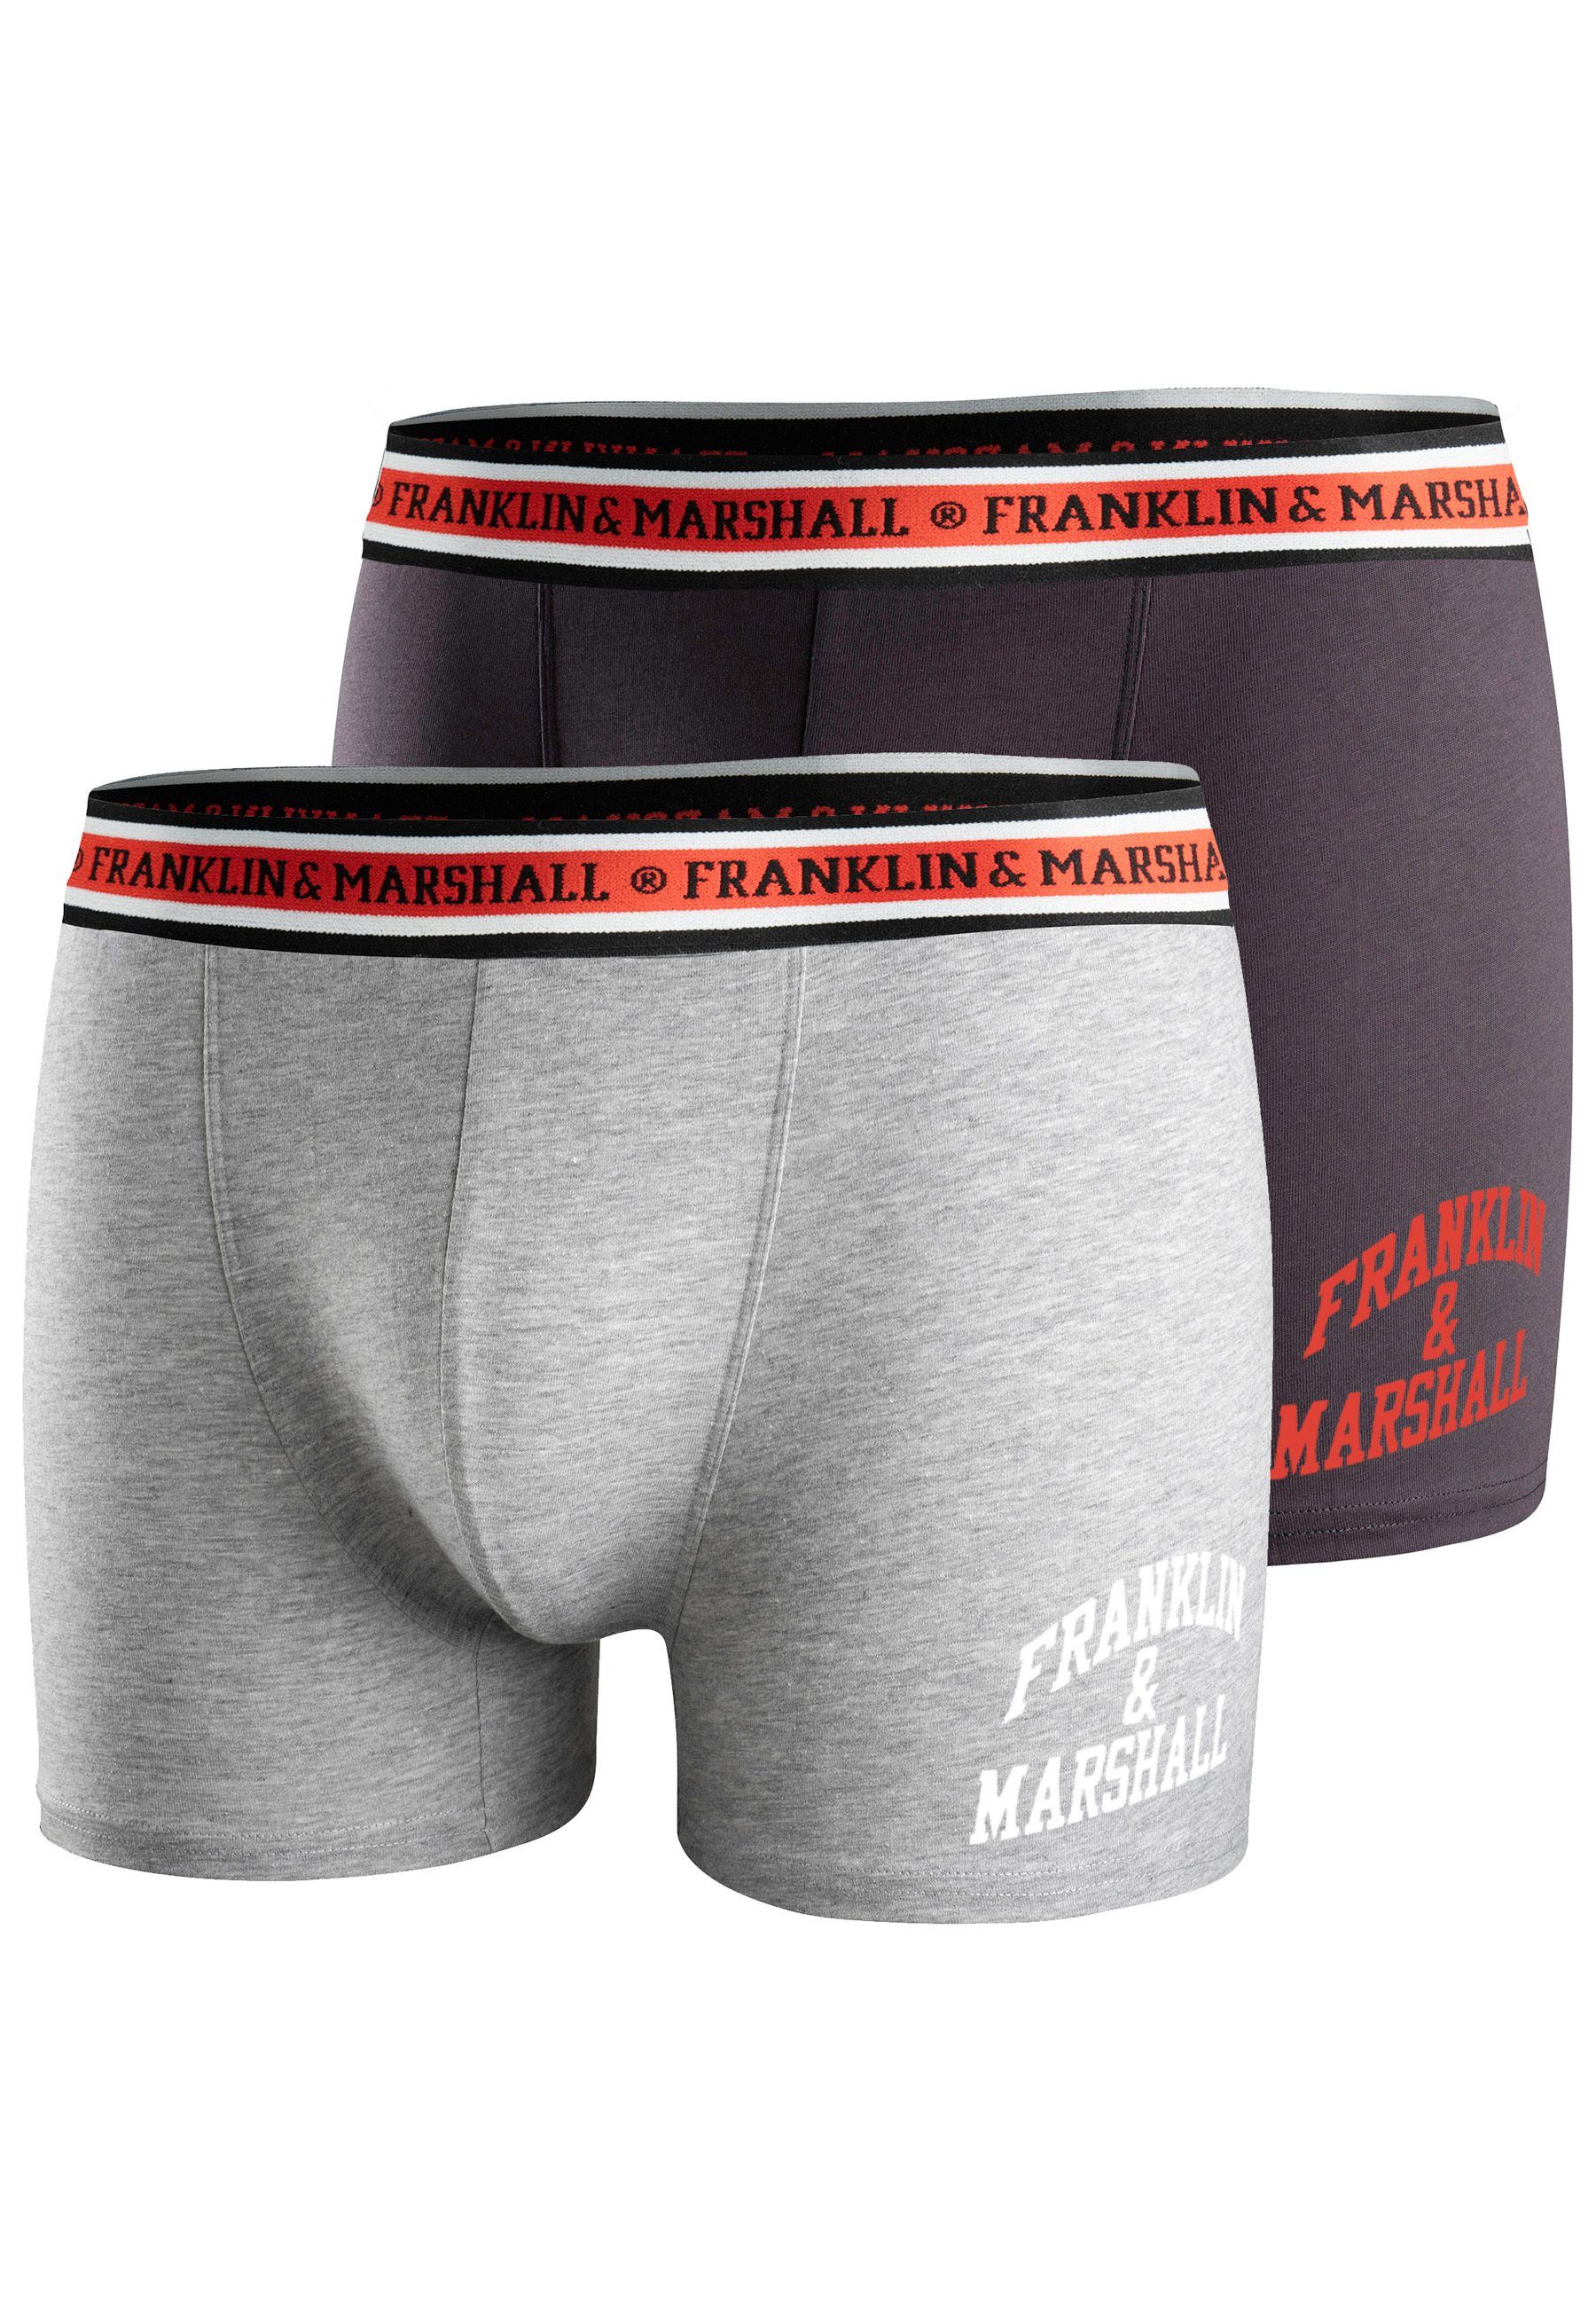 AND FRANKLIN Dunkelgrau-Meliert Summer Storm MARSHALL (1-St) Boxershorts